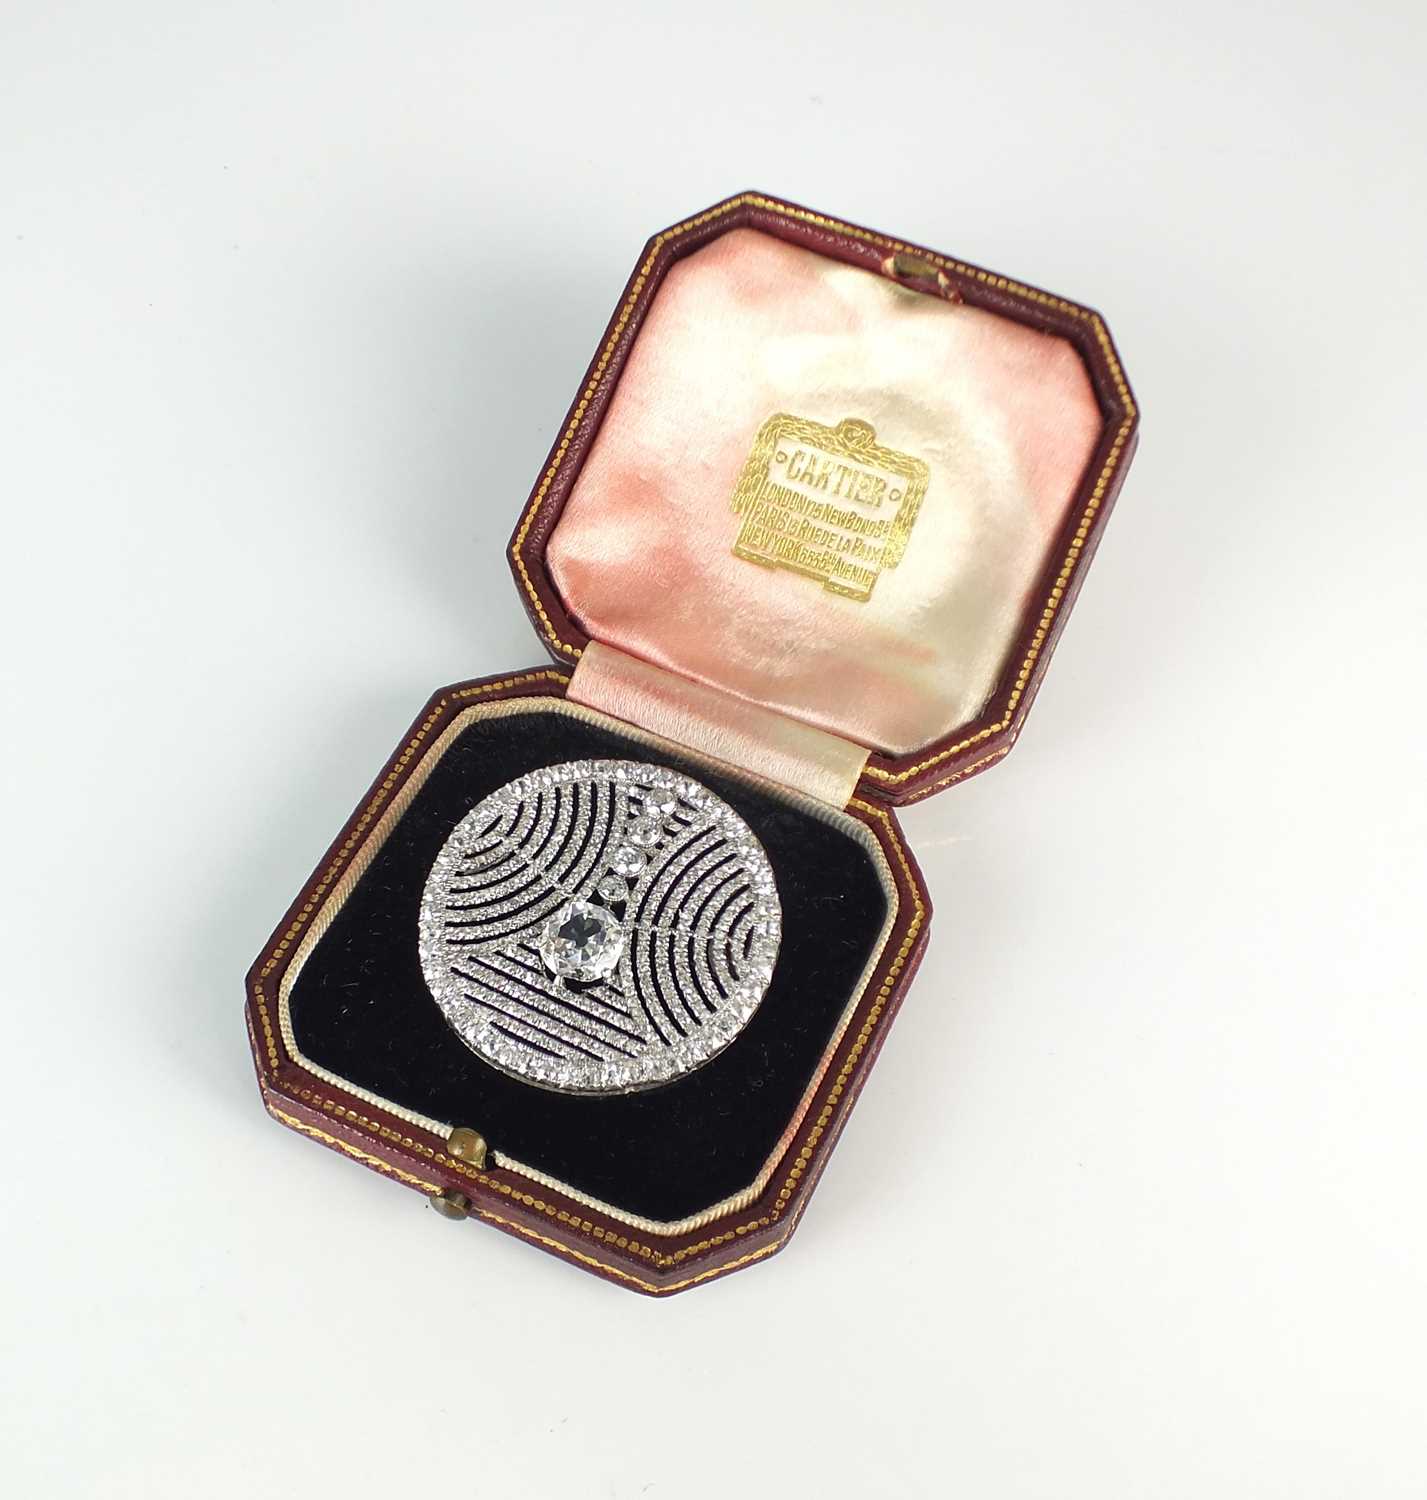 Lot 79 - An Art Deco diamond set brooch attributed to Cartier